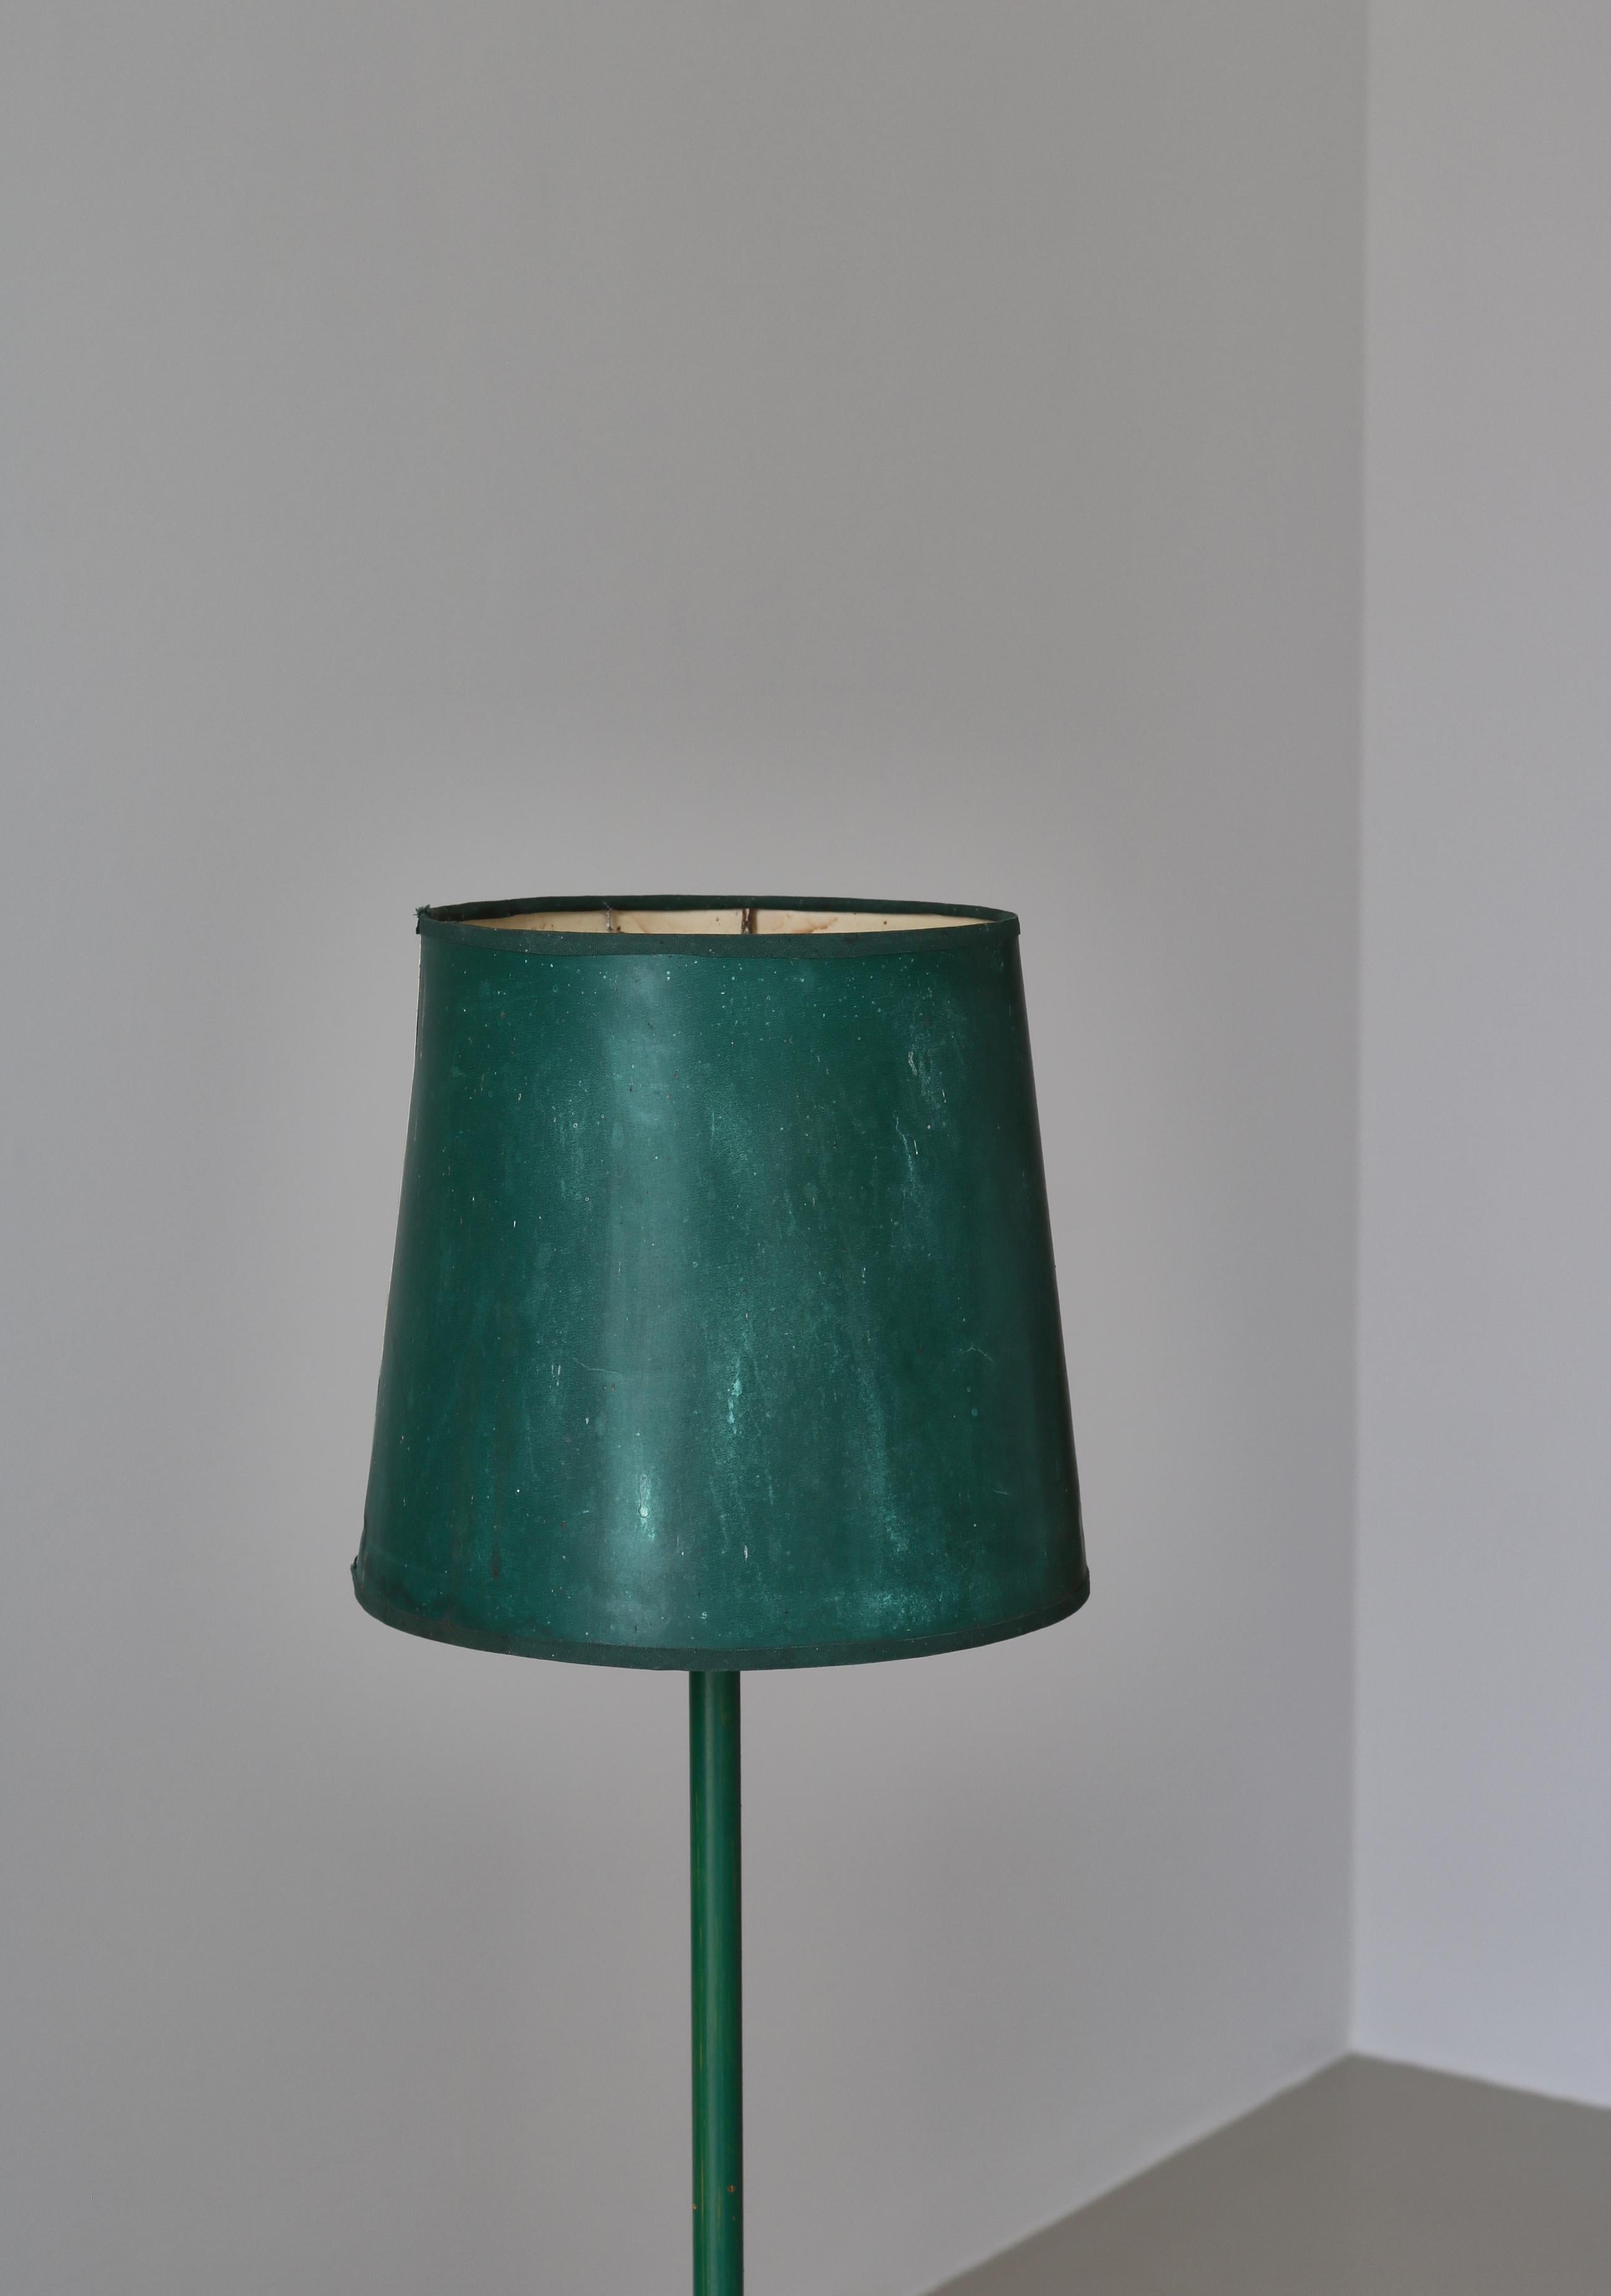 Scandinavian Modern Floor Lamp Green Lacquered Metal, 1940s For Sale 1